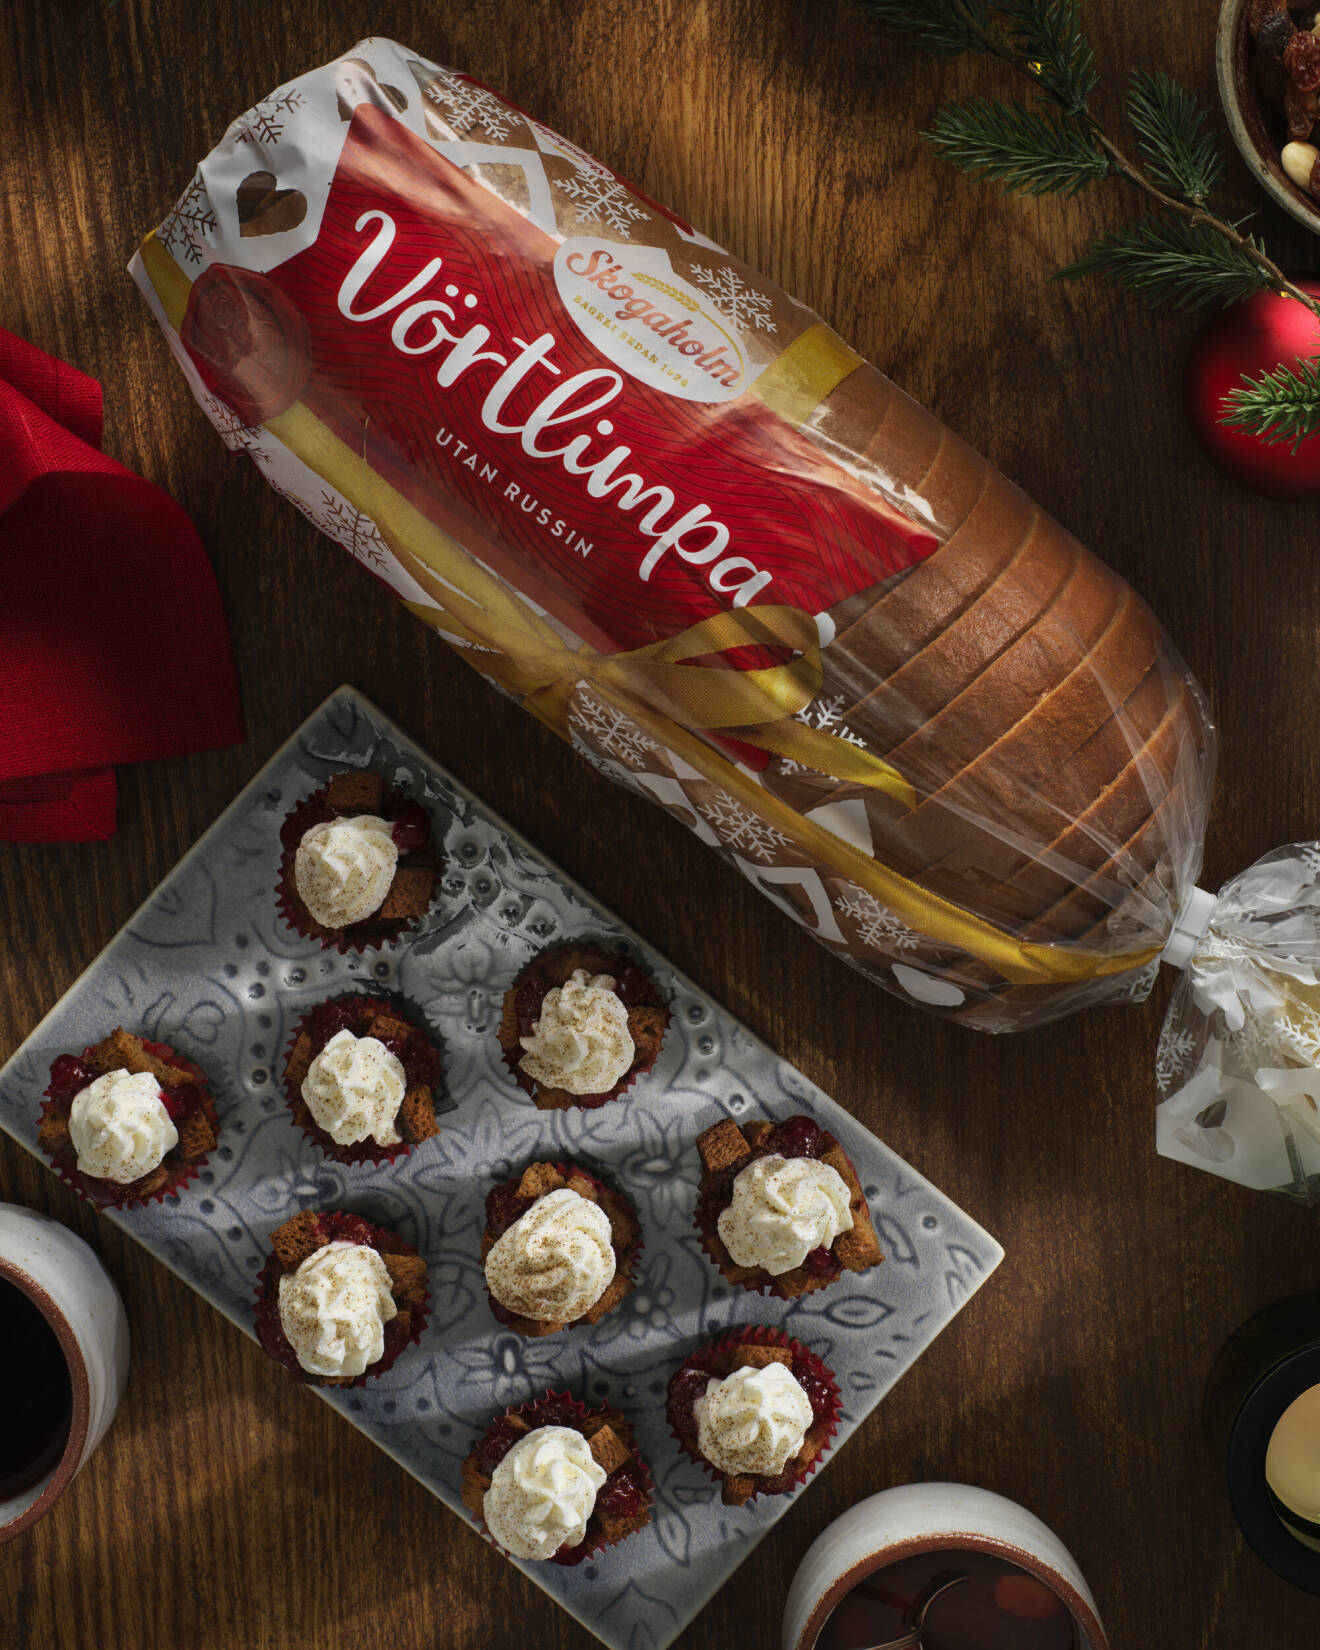 Små bread puddings med julsmaker